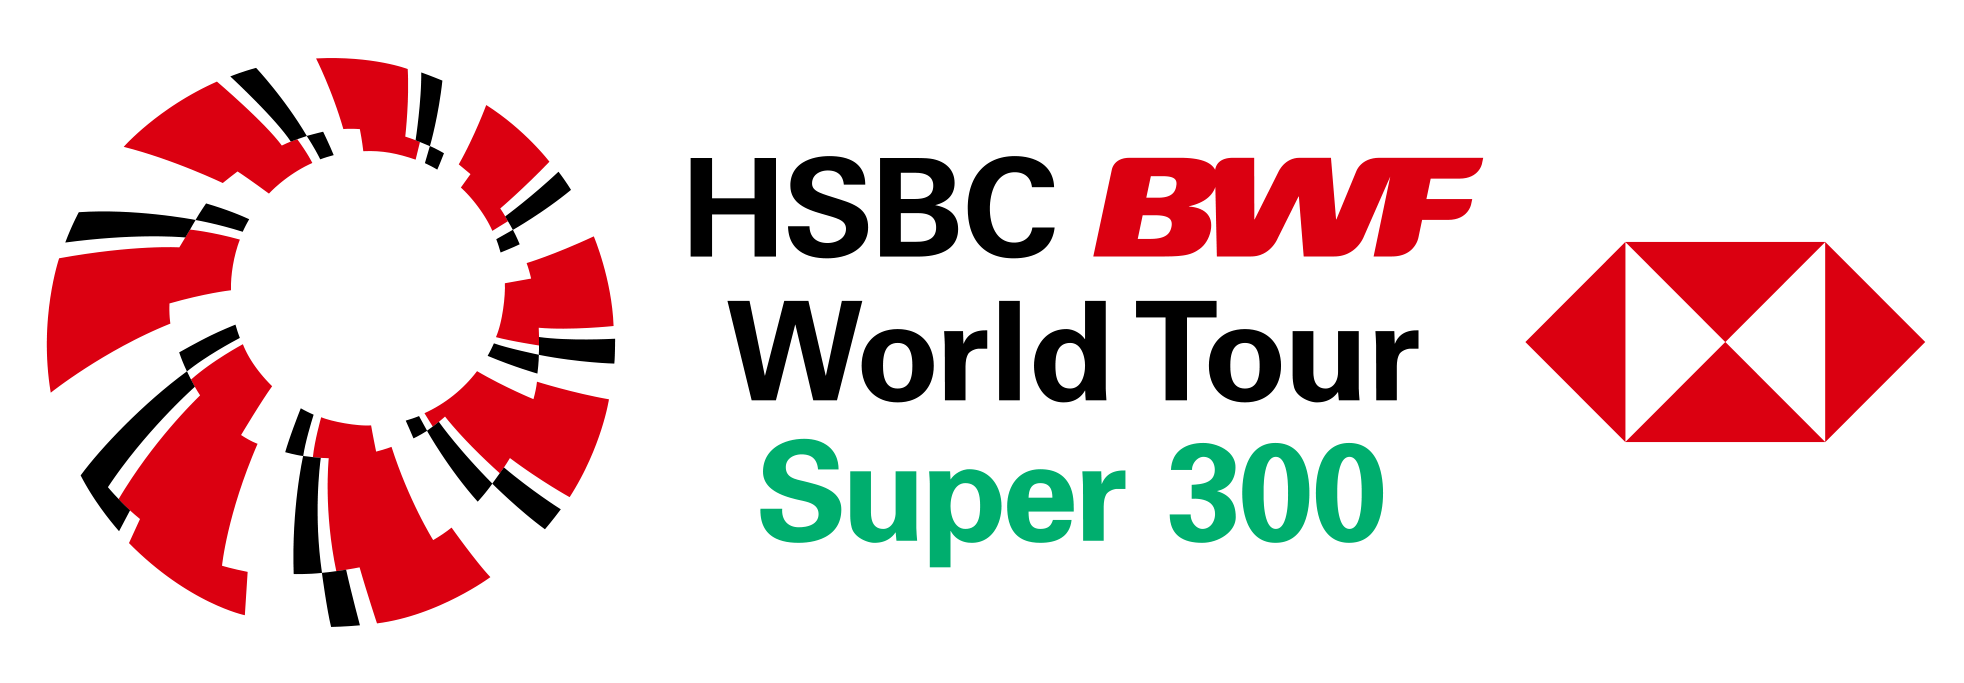 HSBC_BWF_SUFFIX_LAND_RGB_SUPER300_POS